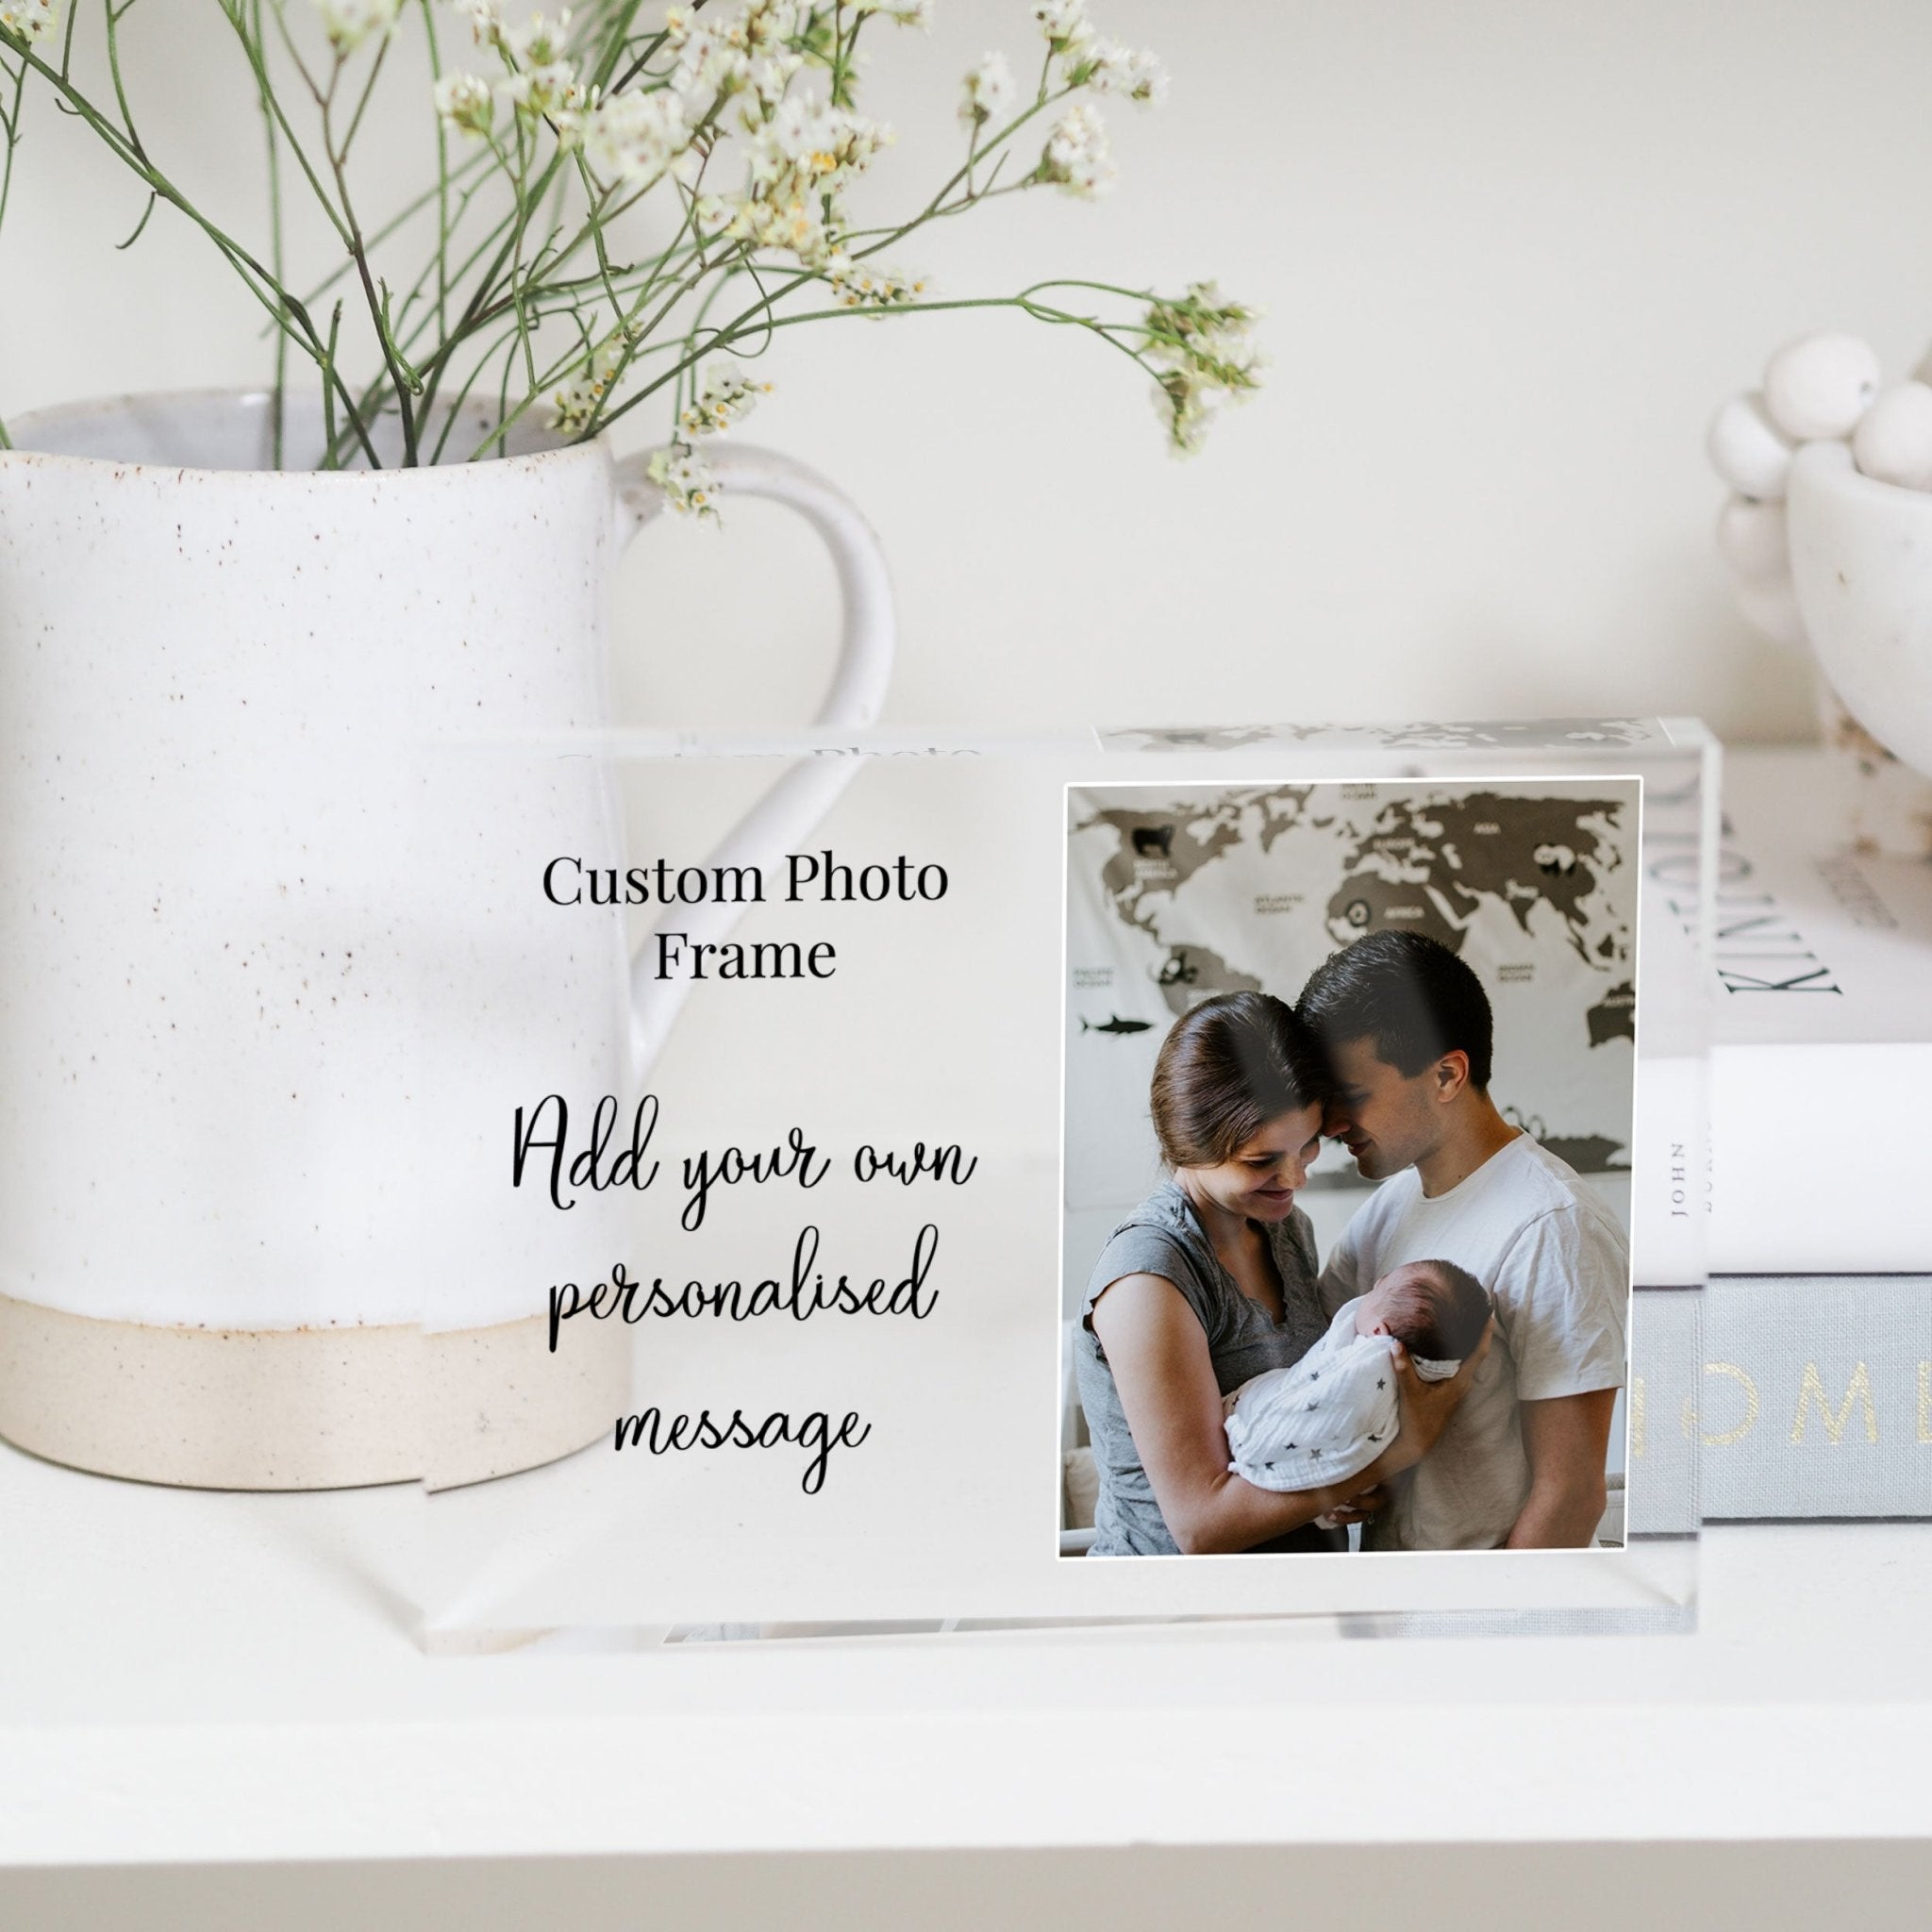 Godparent Gift | God Parent Proposal Gift | Godparents Picture Frame PhotoBlock - Unique Prints